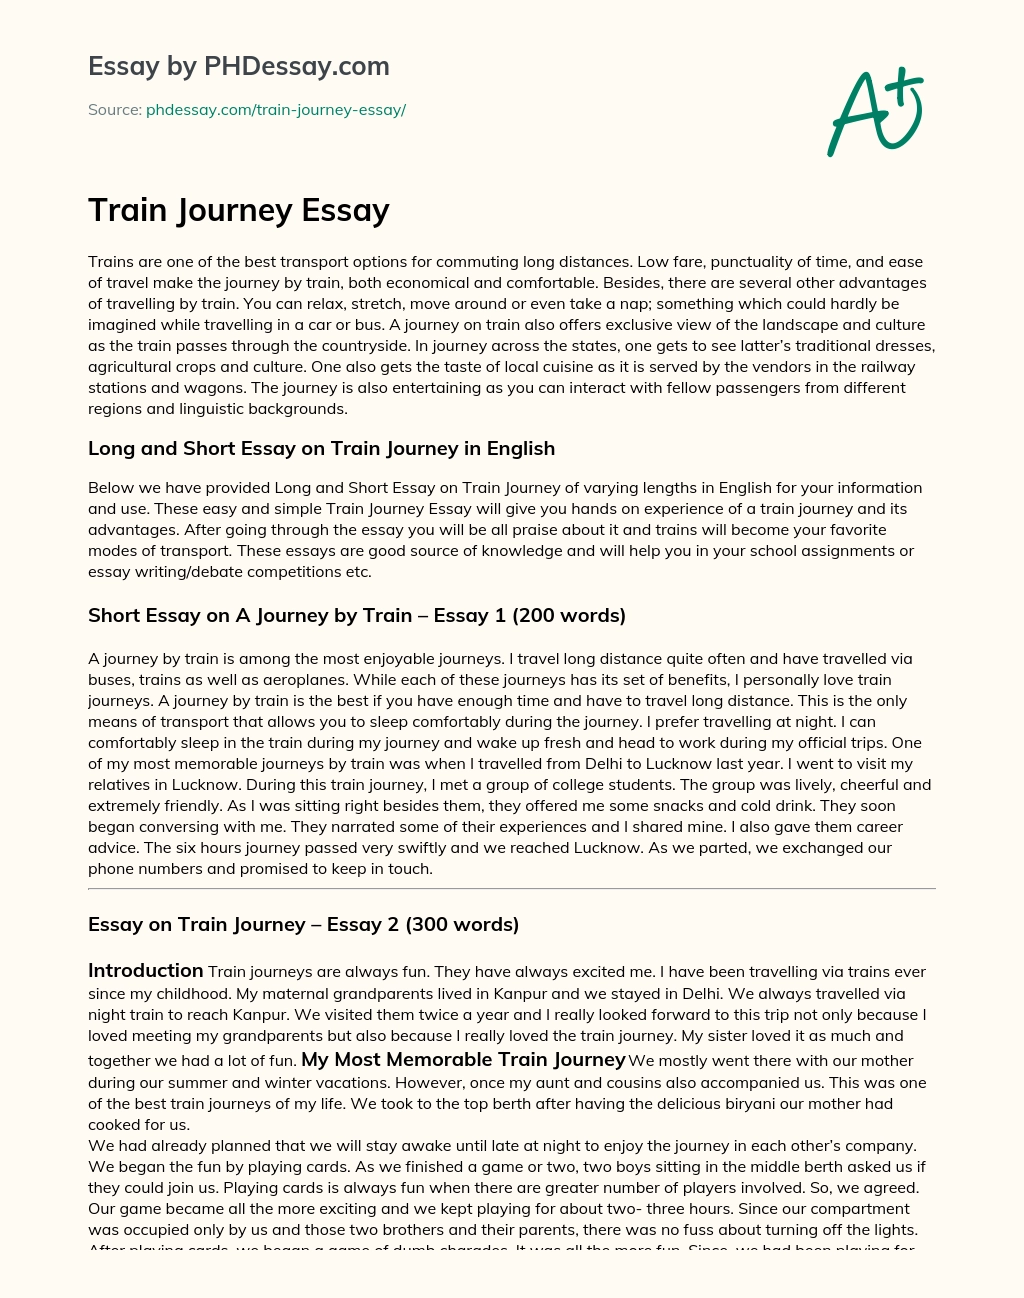 Train Journey Essay essay